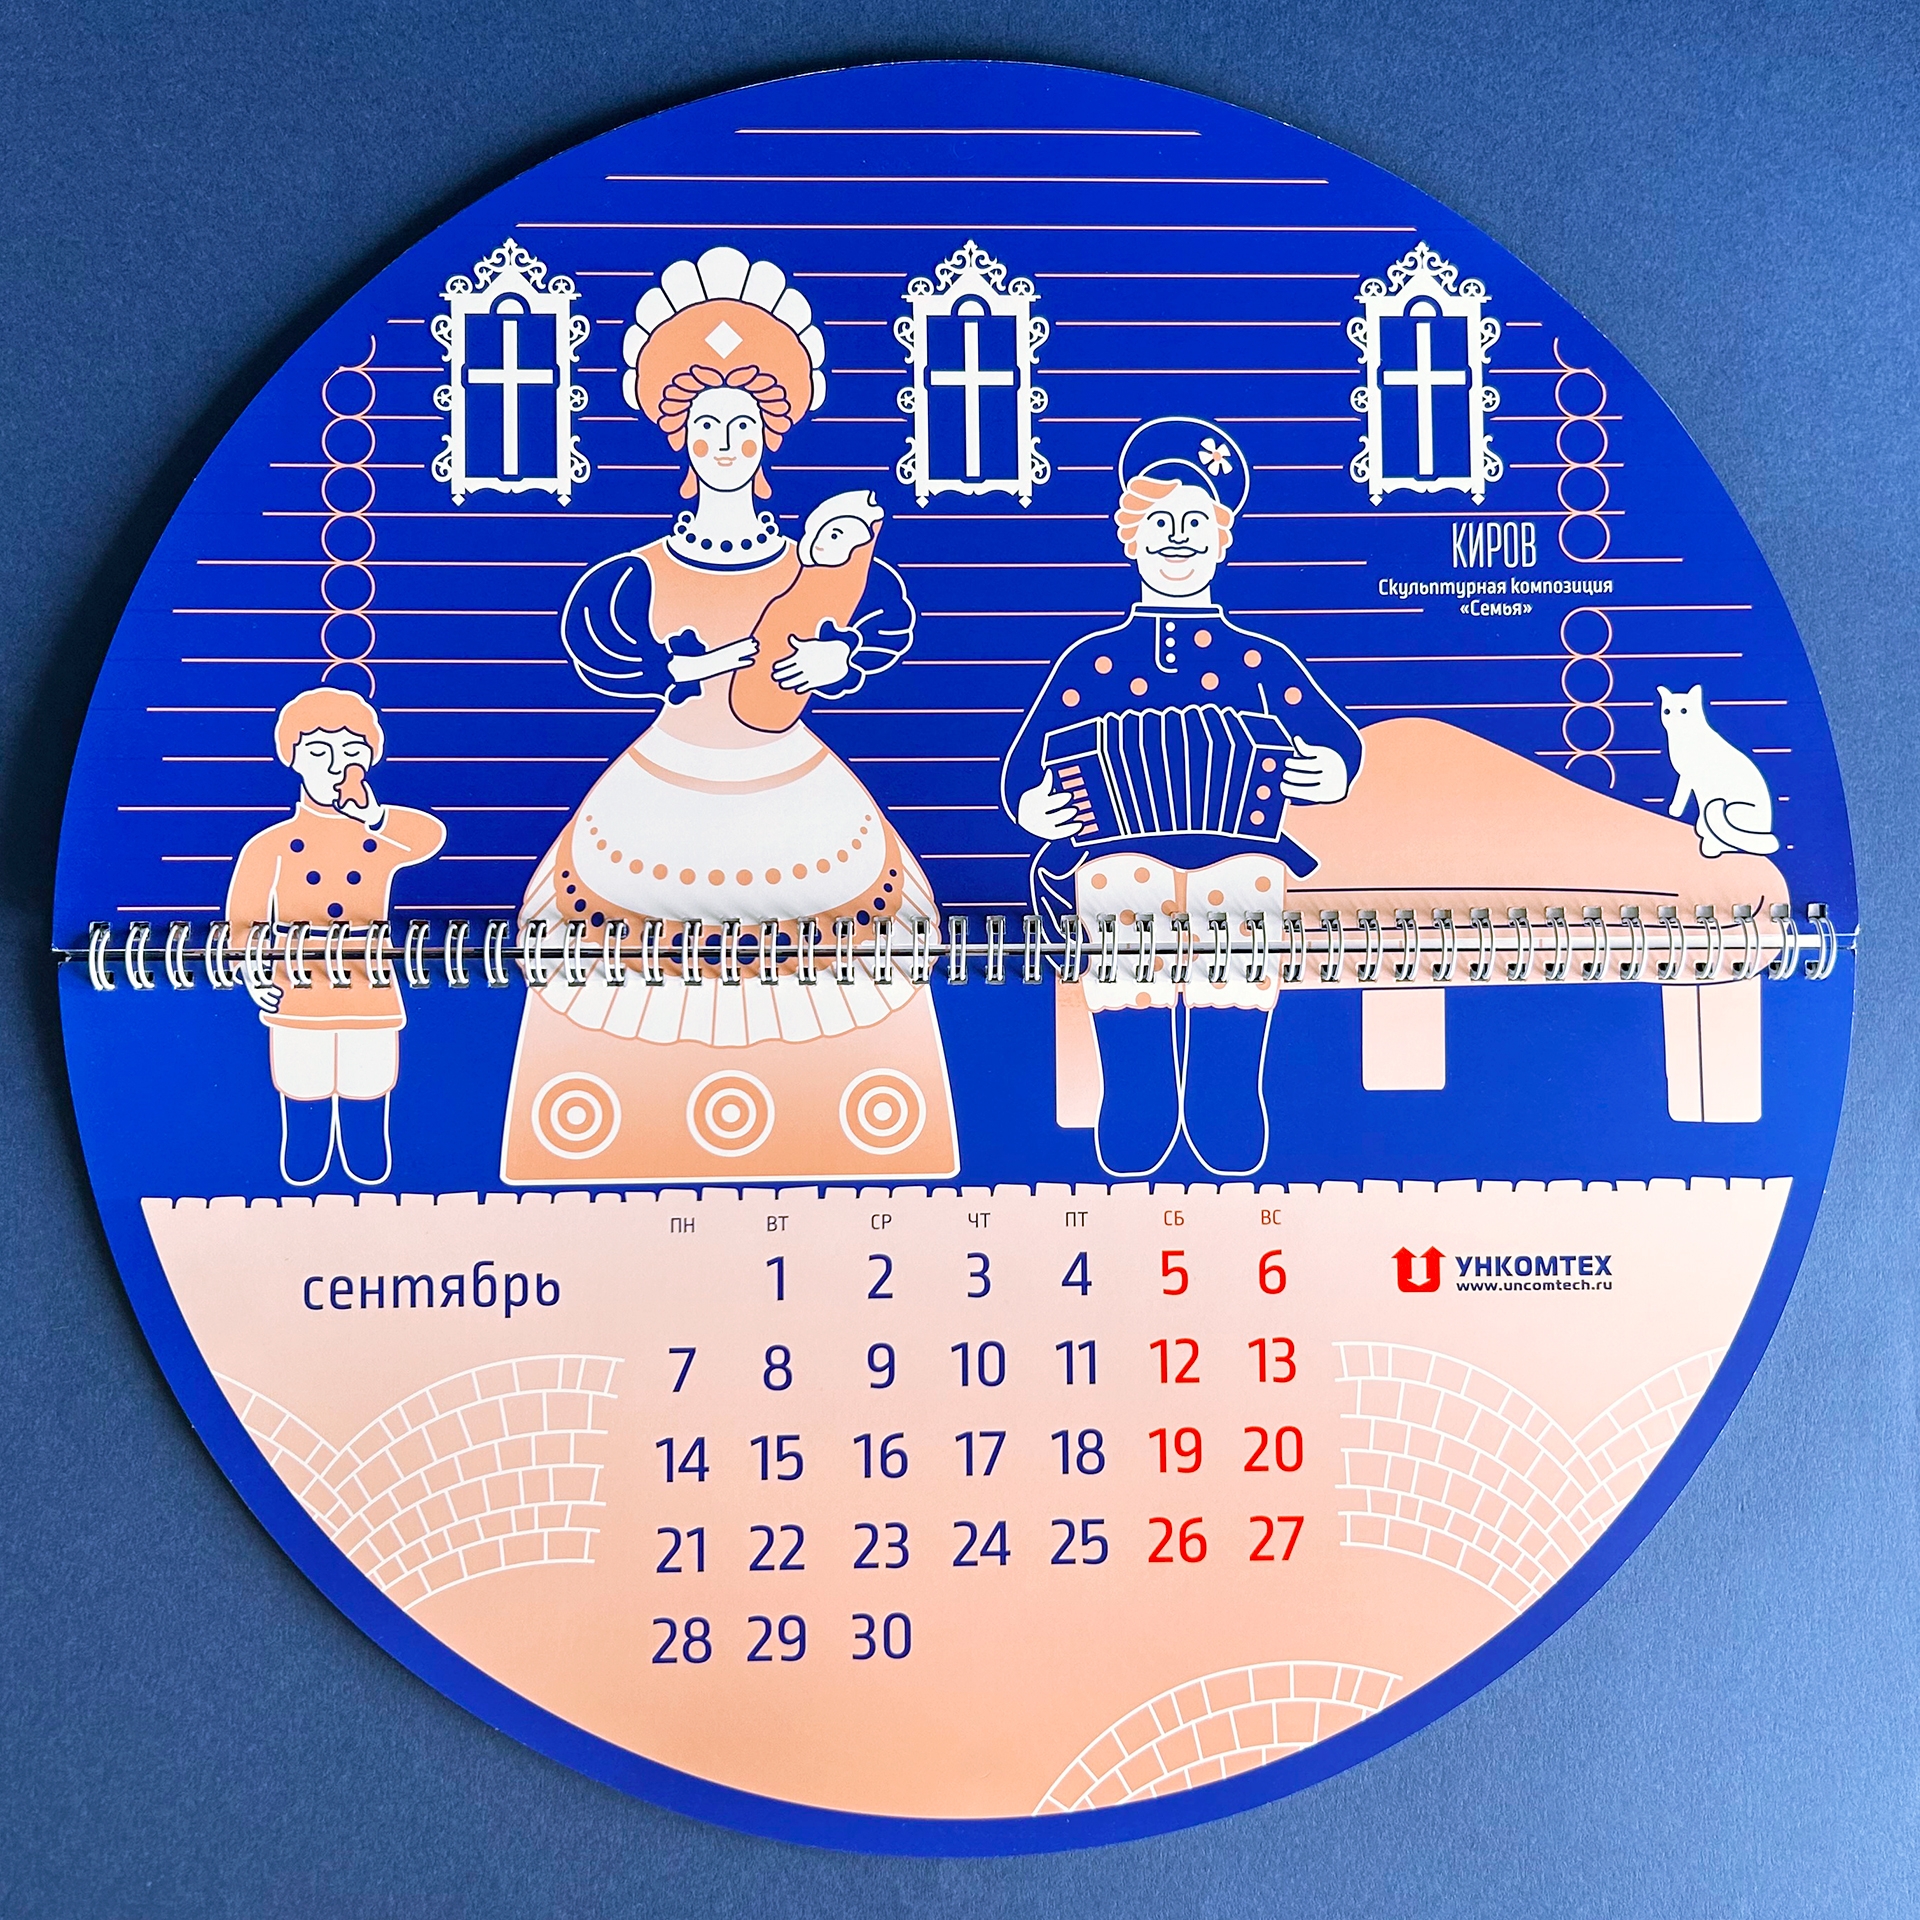 Ункомтех - Календарь на 2021 год